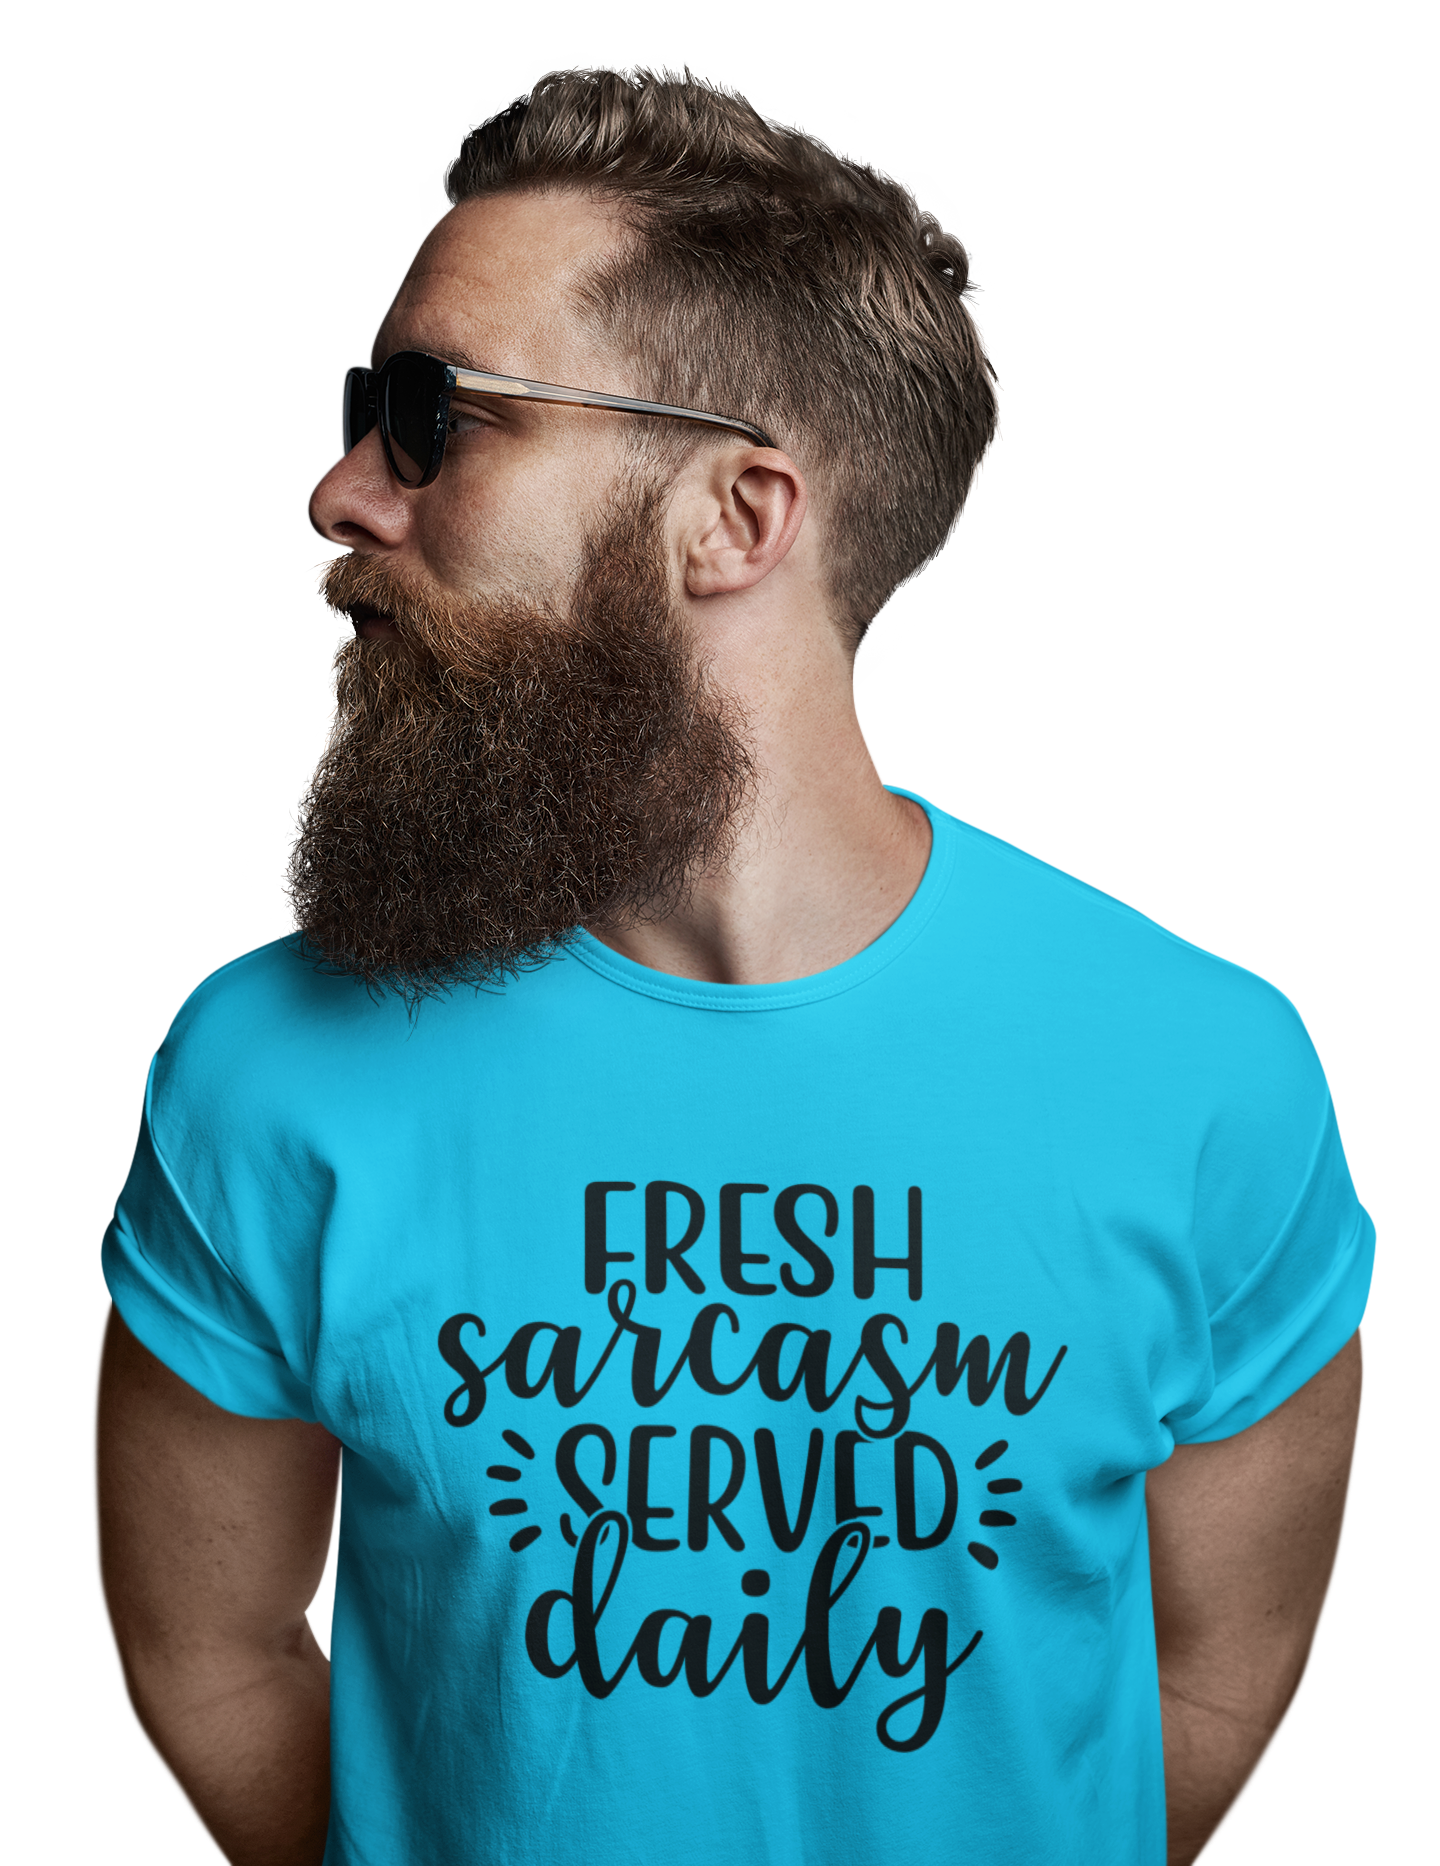 TNH - Men's Round Neck Tshirt - Fresh Sarcasm